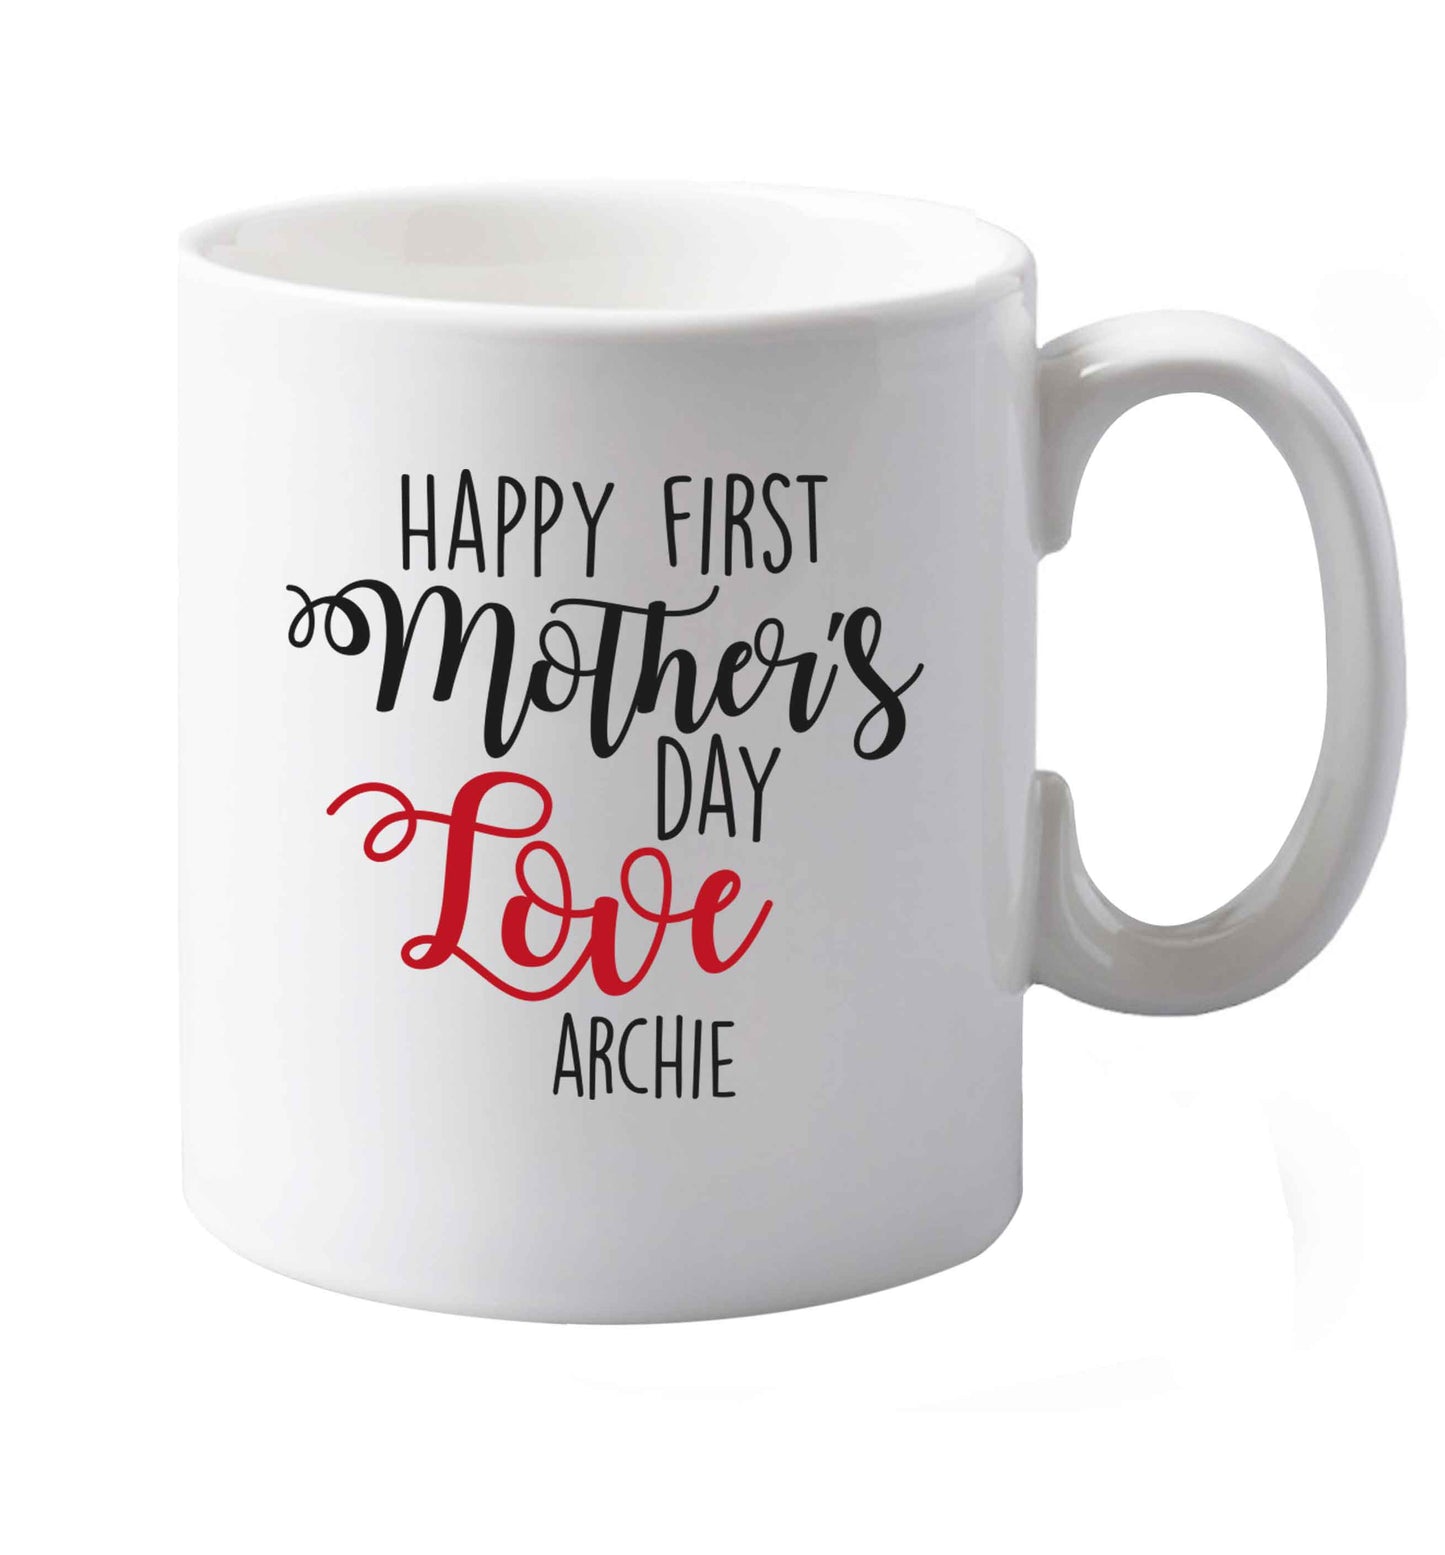 10 oz Mummy's first mother's day! ceramic mug both sides